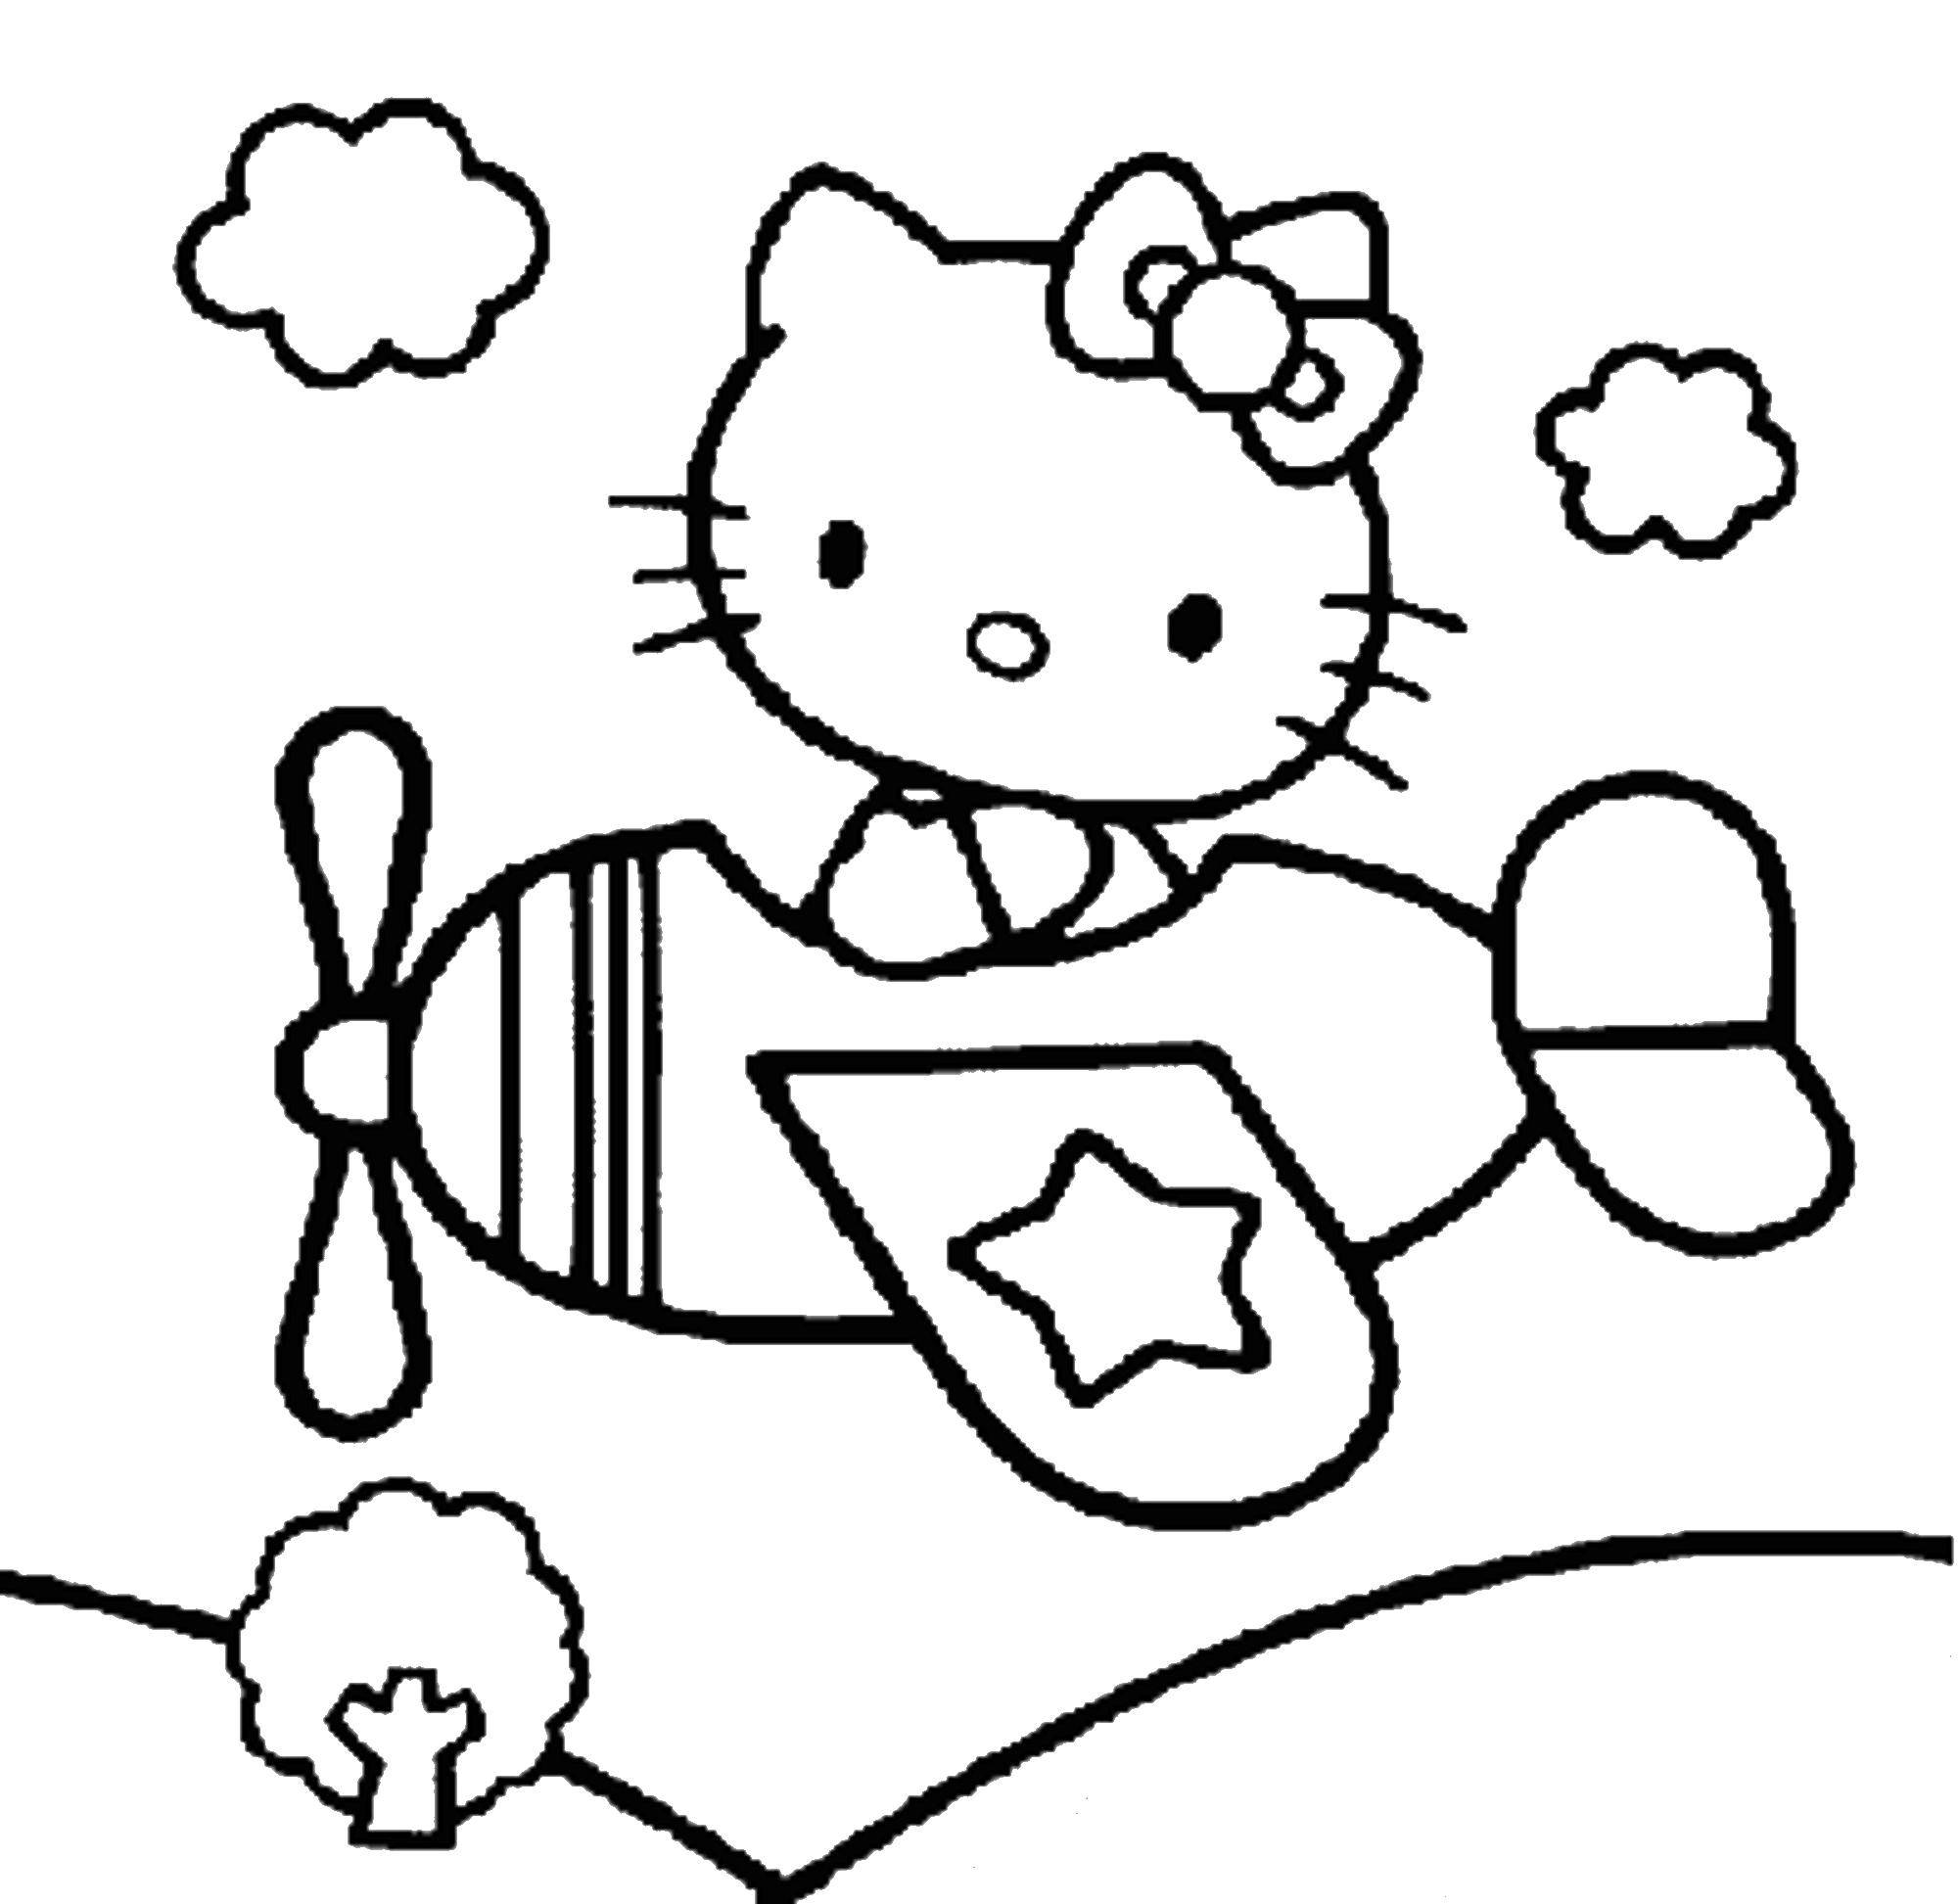 Hello coloring. Раскраска Хелло Китти. Хэллоу Китти раскраска. Раскраска для малышей Китти. Раскраски для детей Хэллоу Китти.